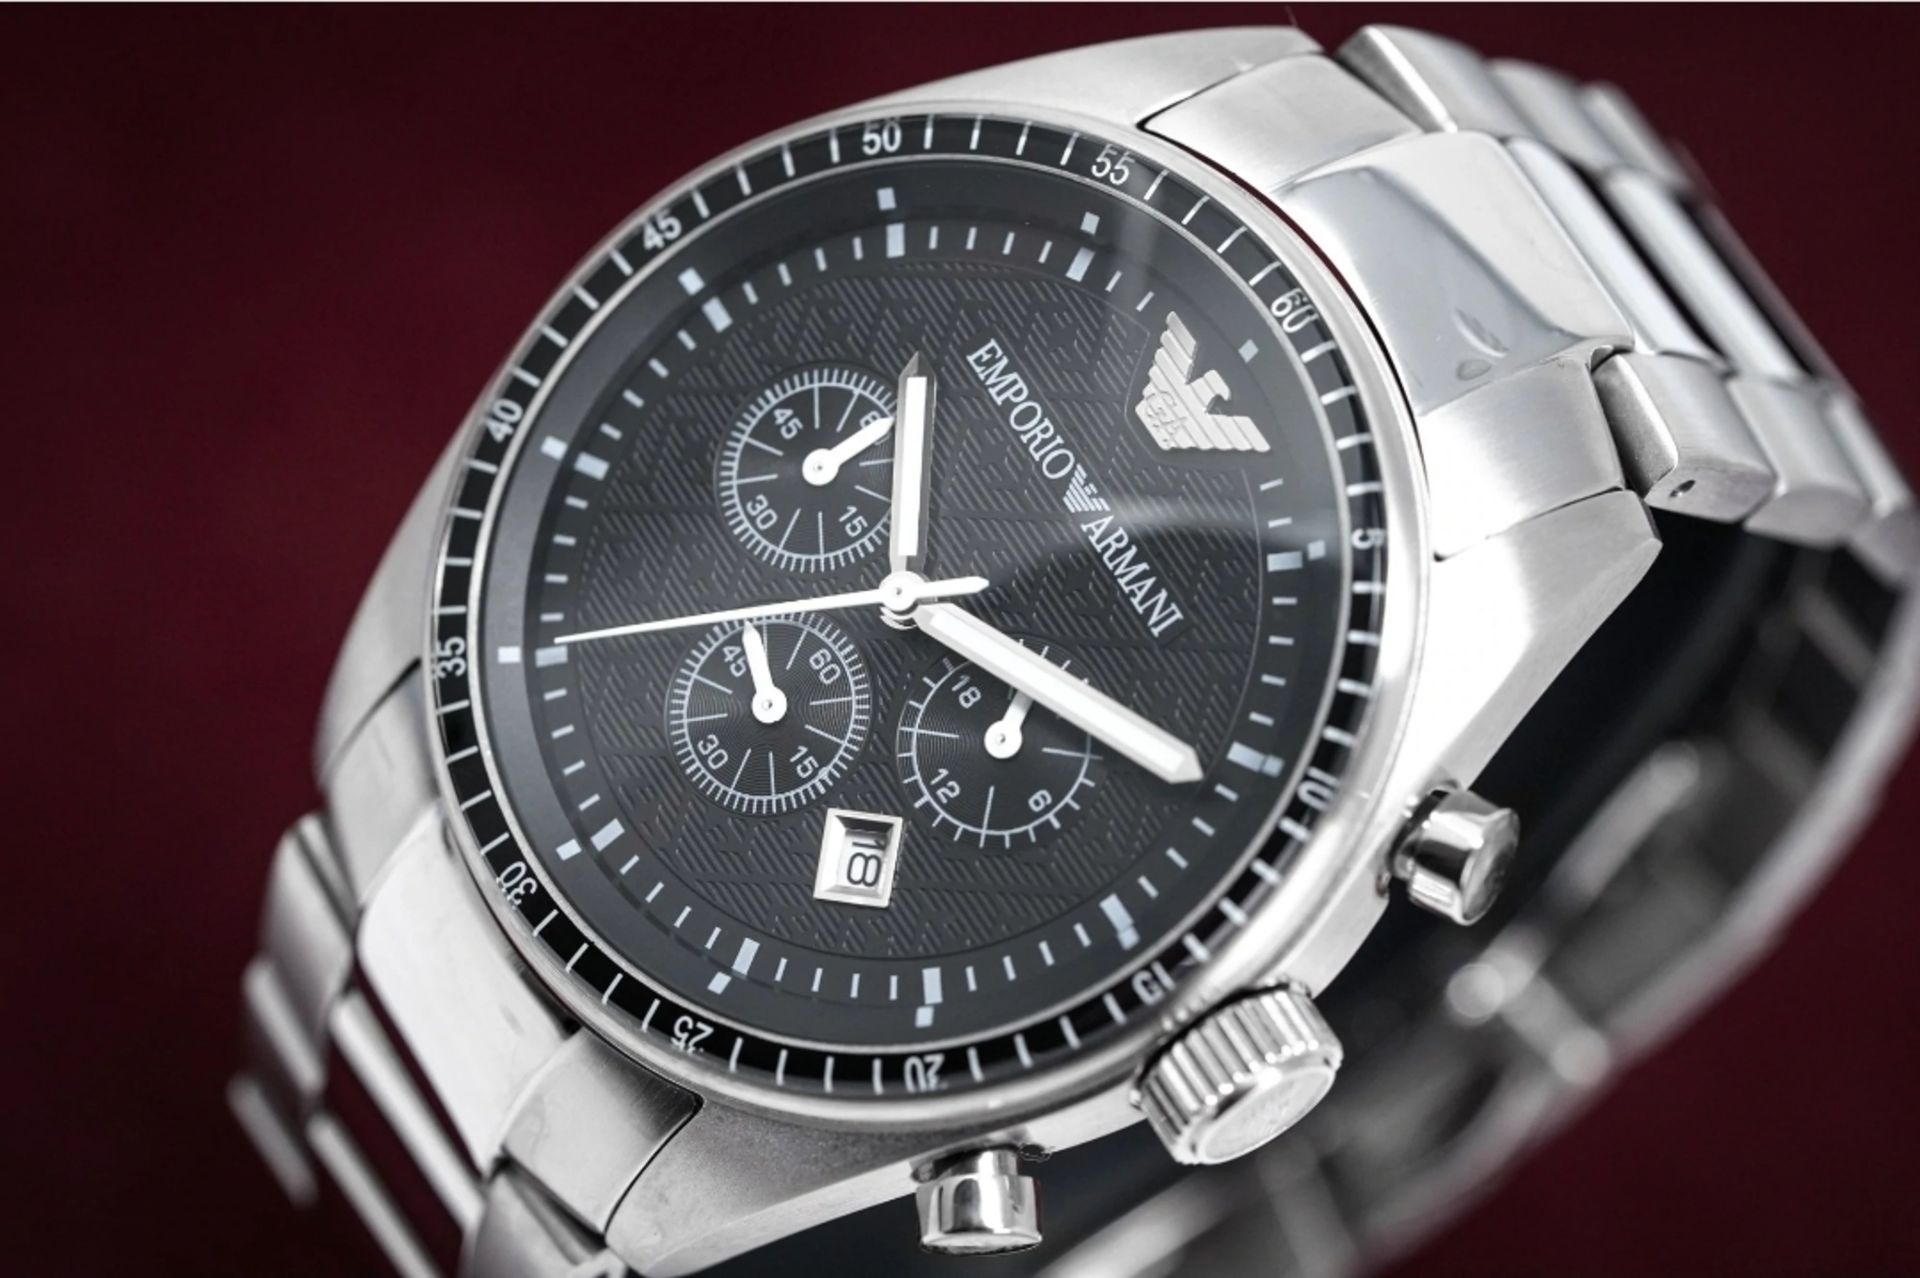 Emporio Armani AR0585 Men's Classic Silver Bracelet Chronograph Watch - Image 7 of 8